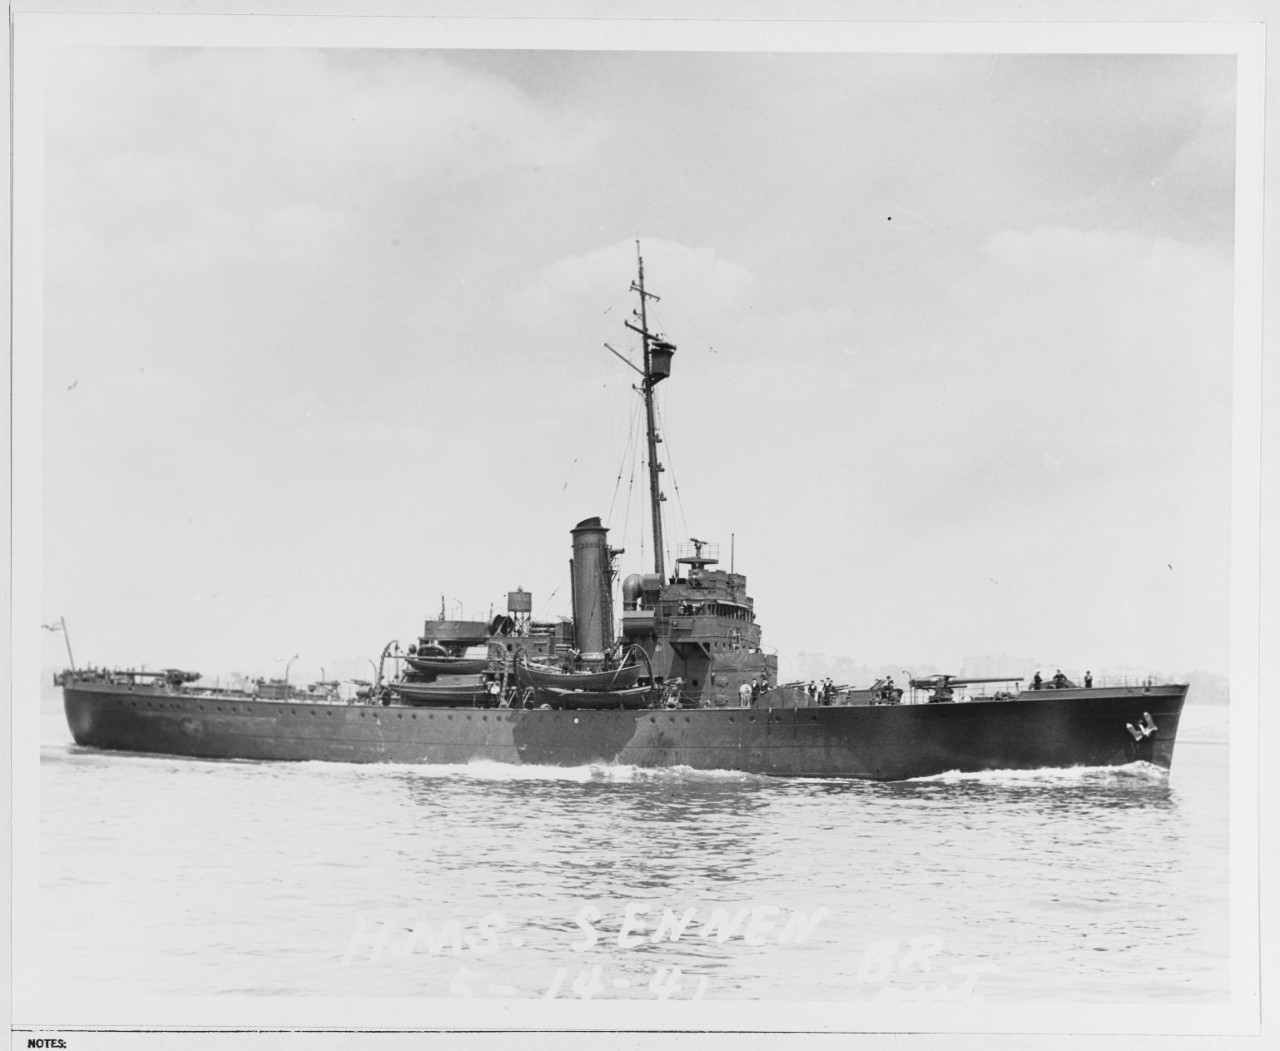 HMS SENNEN (British escort sloop, ex-USCG CHAMPLAIN, built in 1928)